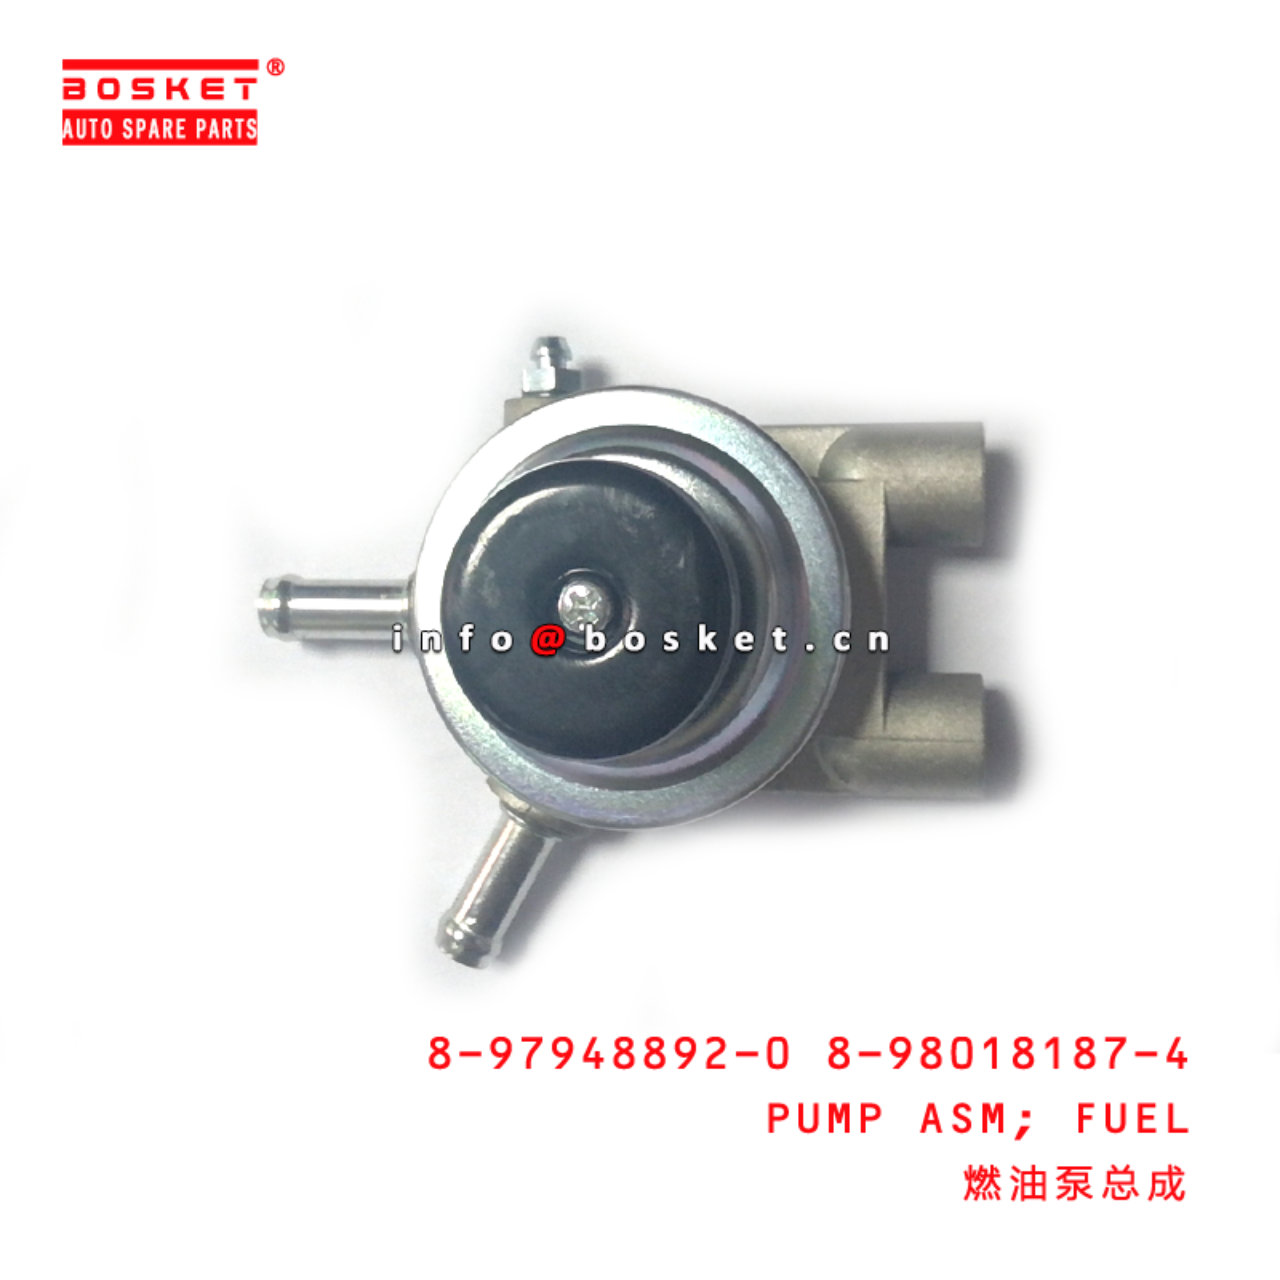 8-97948892-0 8-98018187-4 Fuel Pump Assembly 8979488920 8980181874 